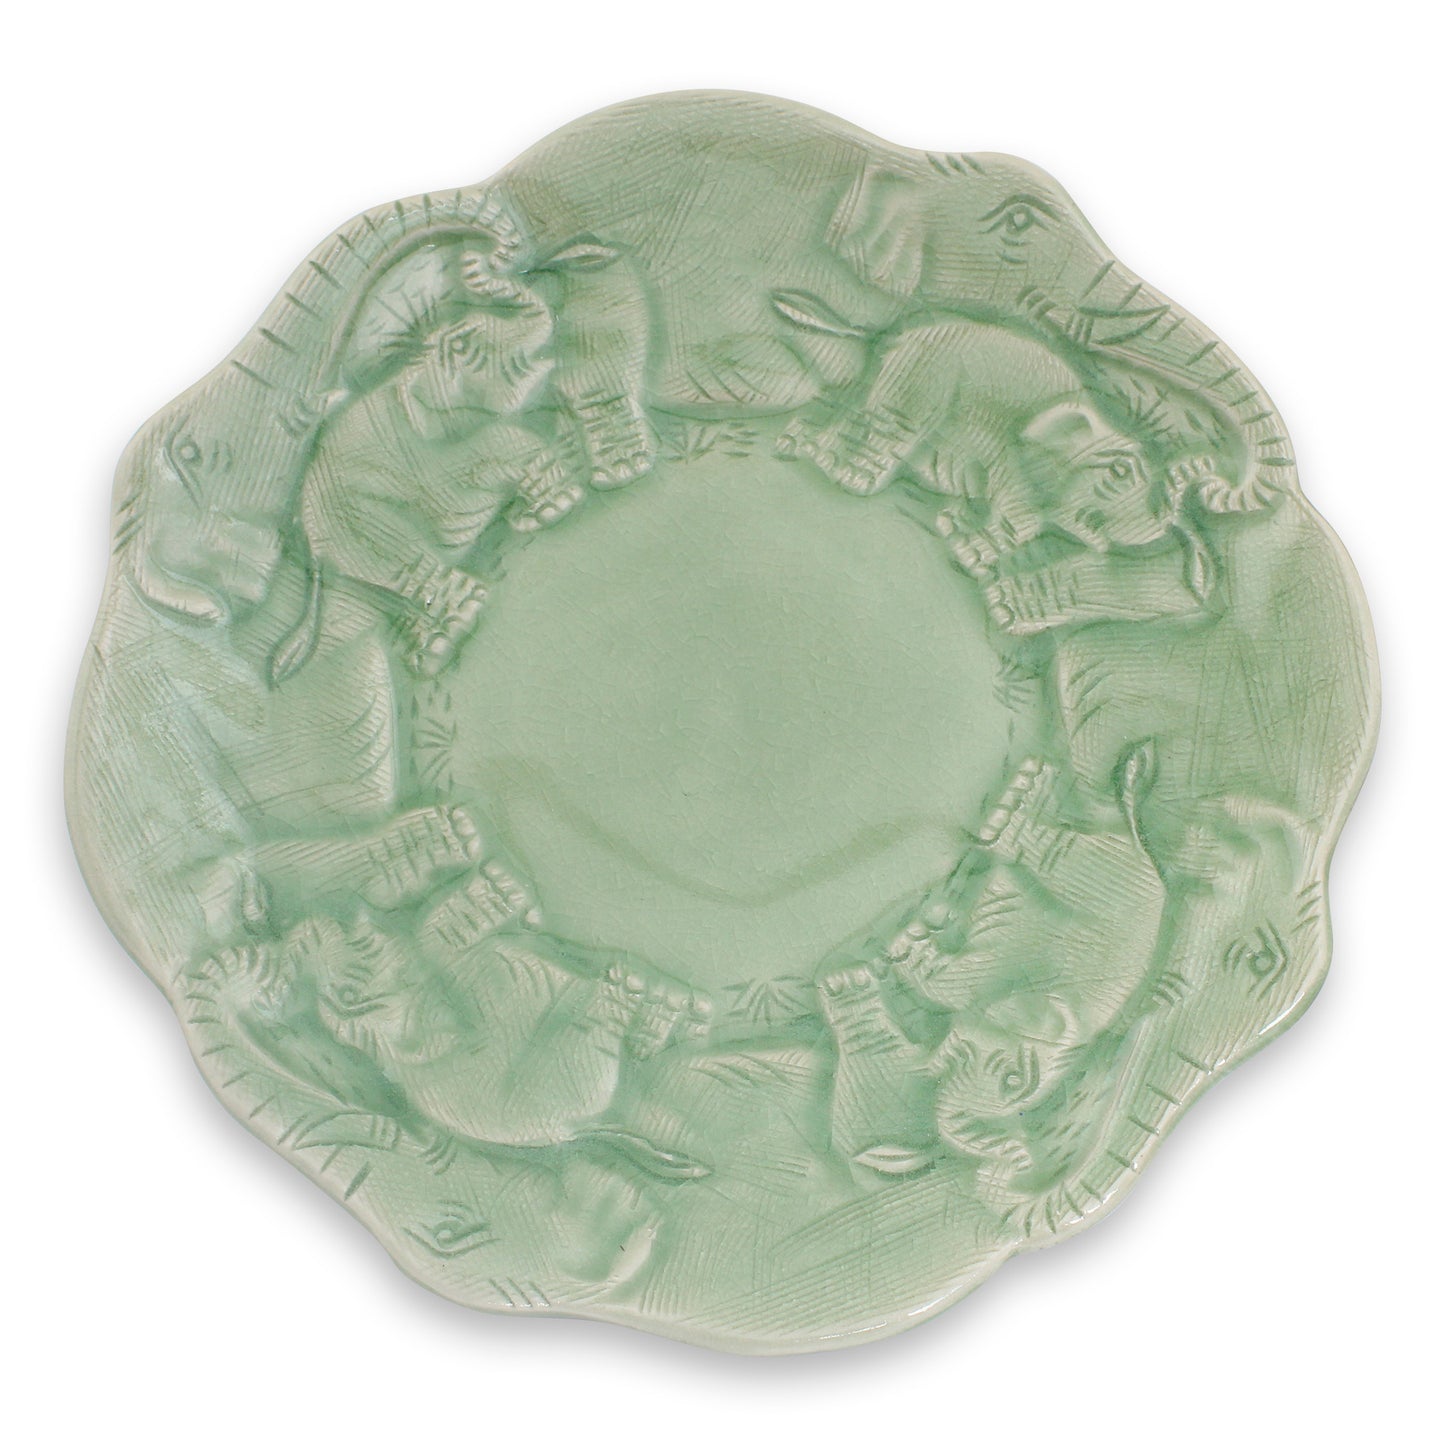 Elephant Family Artisan Crafted Elephant Theme Thai Celadon Ceramic Plate